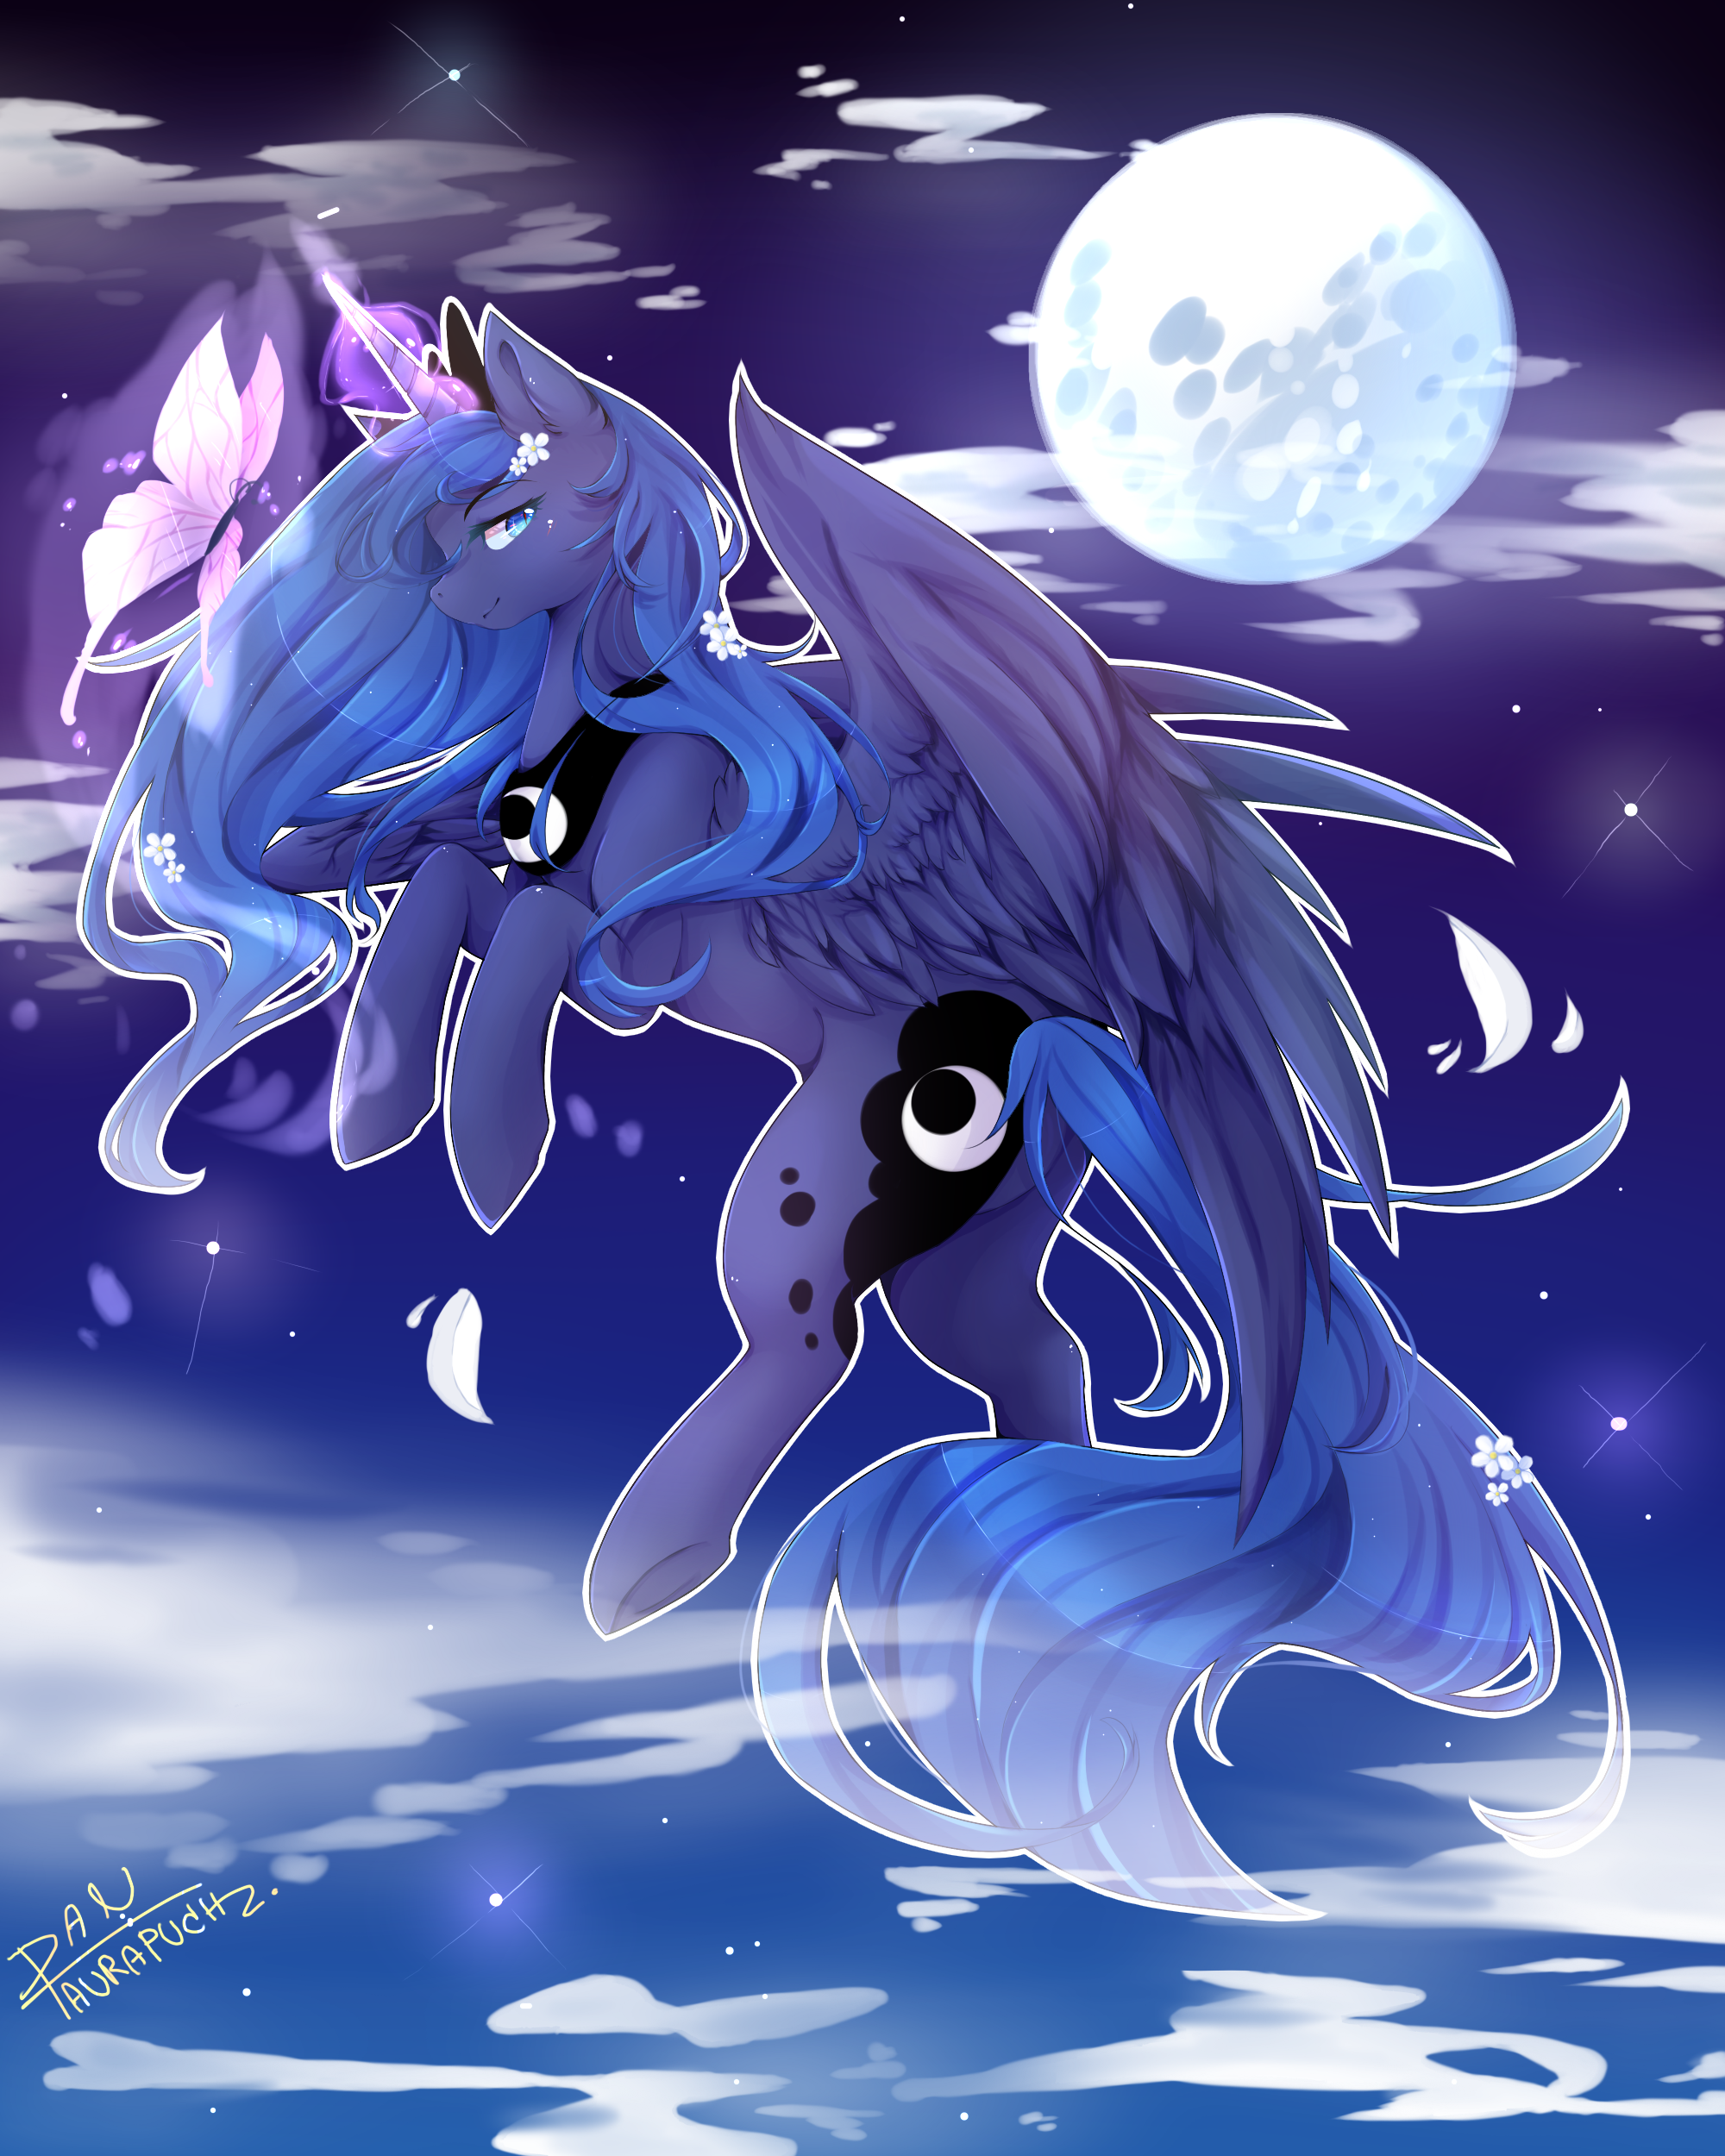 My little pony принцесса луна. Луна МЛП. Принцесса Луна МЛП. МЛП принцесса Луна арт. Луна МЛП арт.